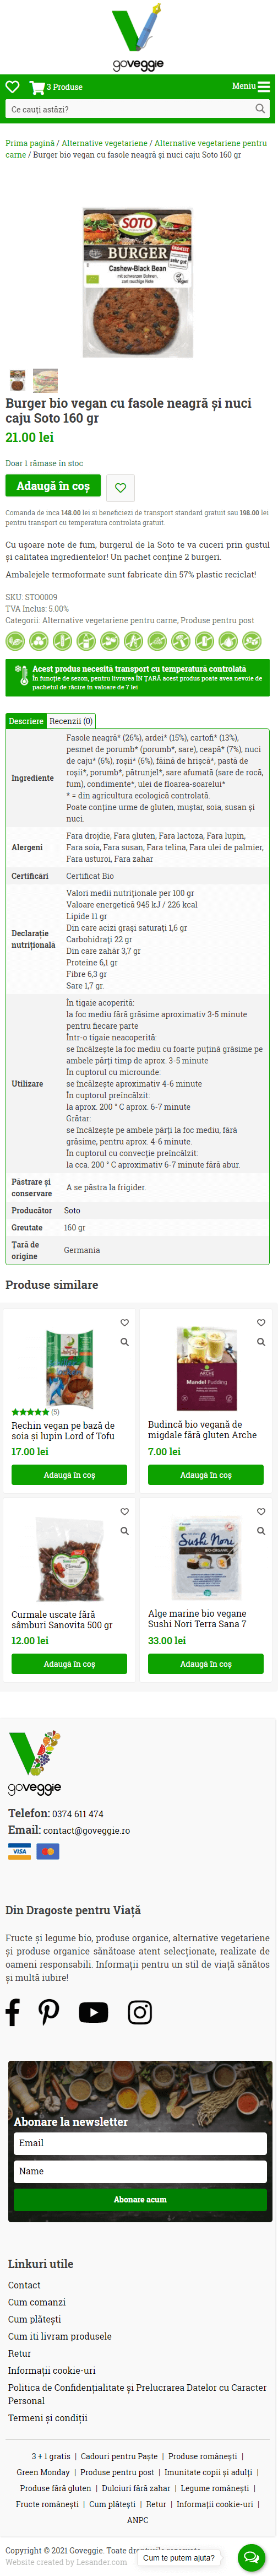 WebDesign eCommerce product page